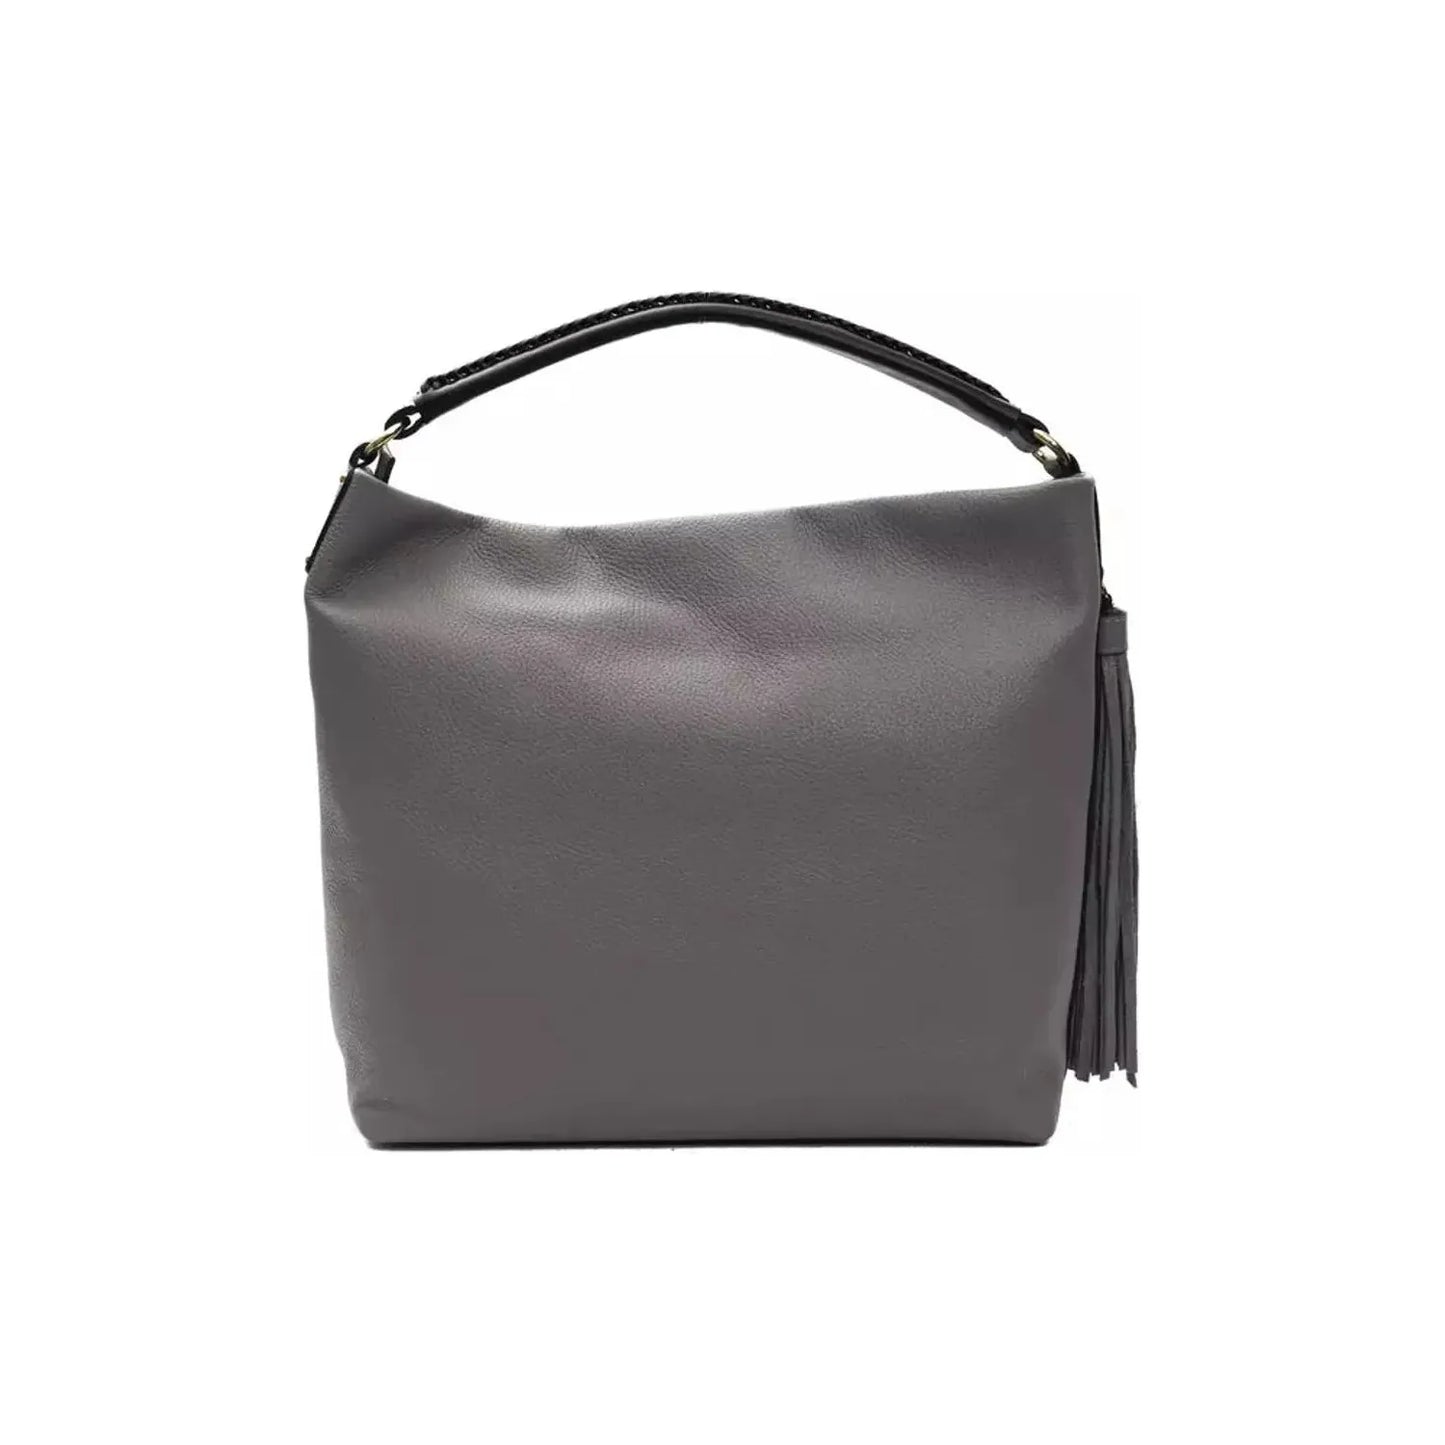 Pompei Donatella Chic Gray Leather Shoulder Bag gray-leather-shoulder-bag-2 WOMAN SHOULDER BAGS stock_product_image_5800_1177332362-21-30a77a29-c6b.webp